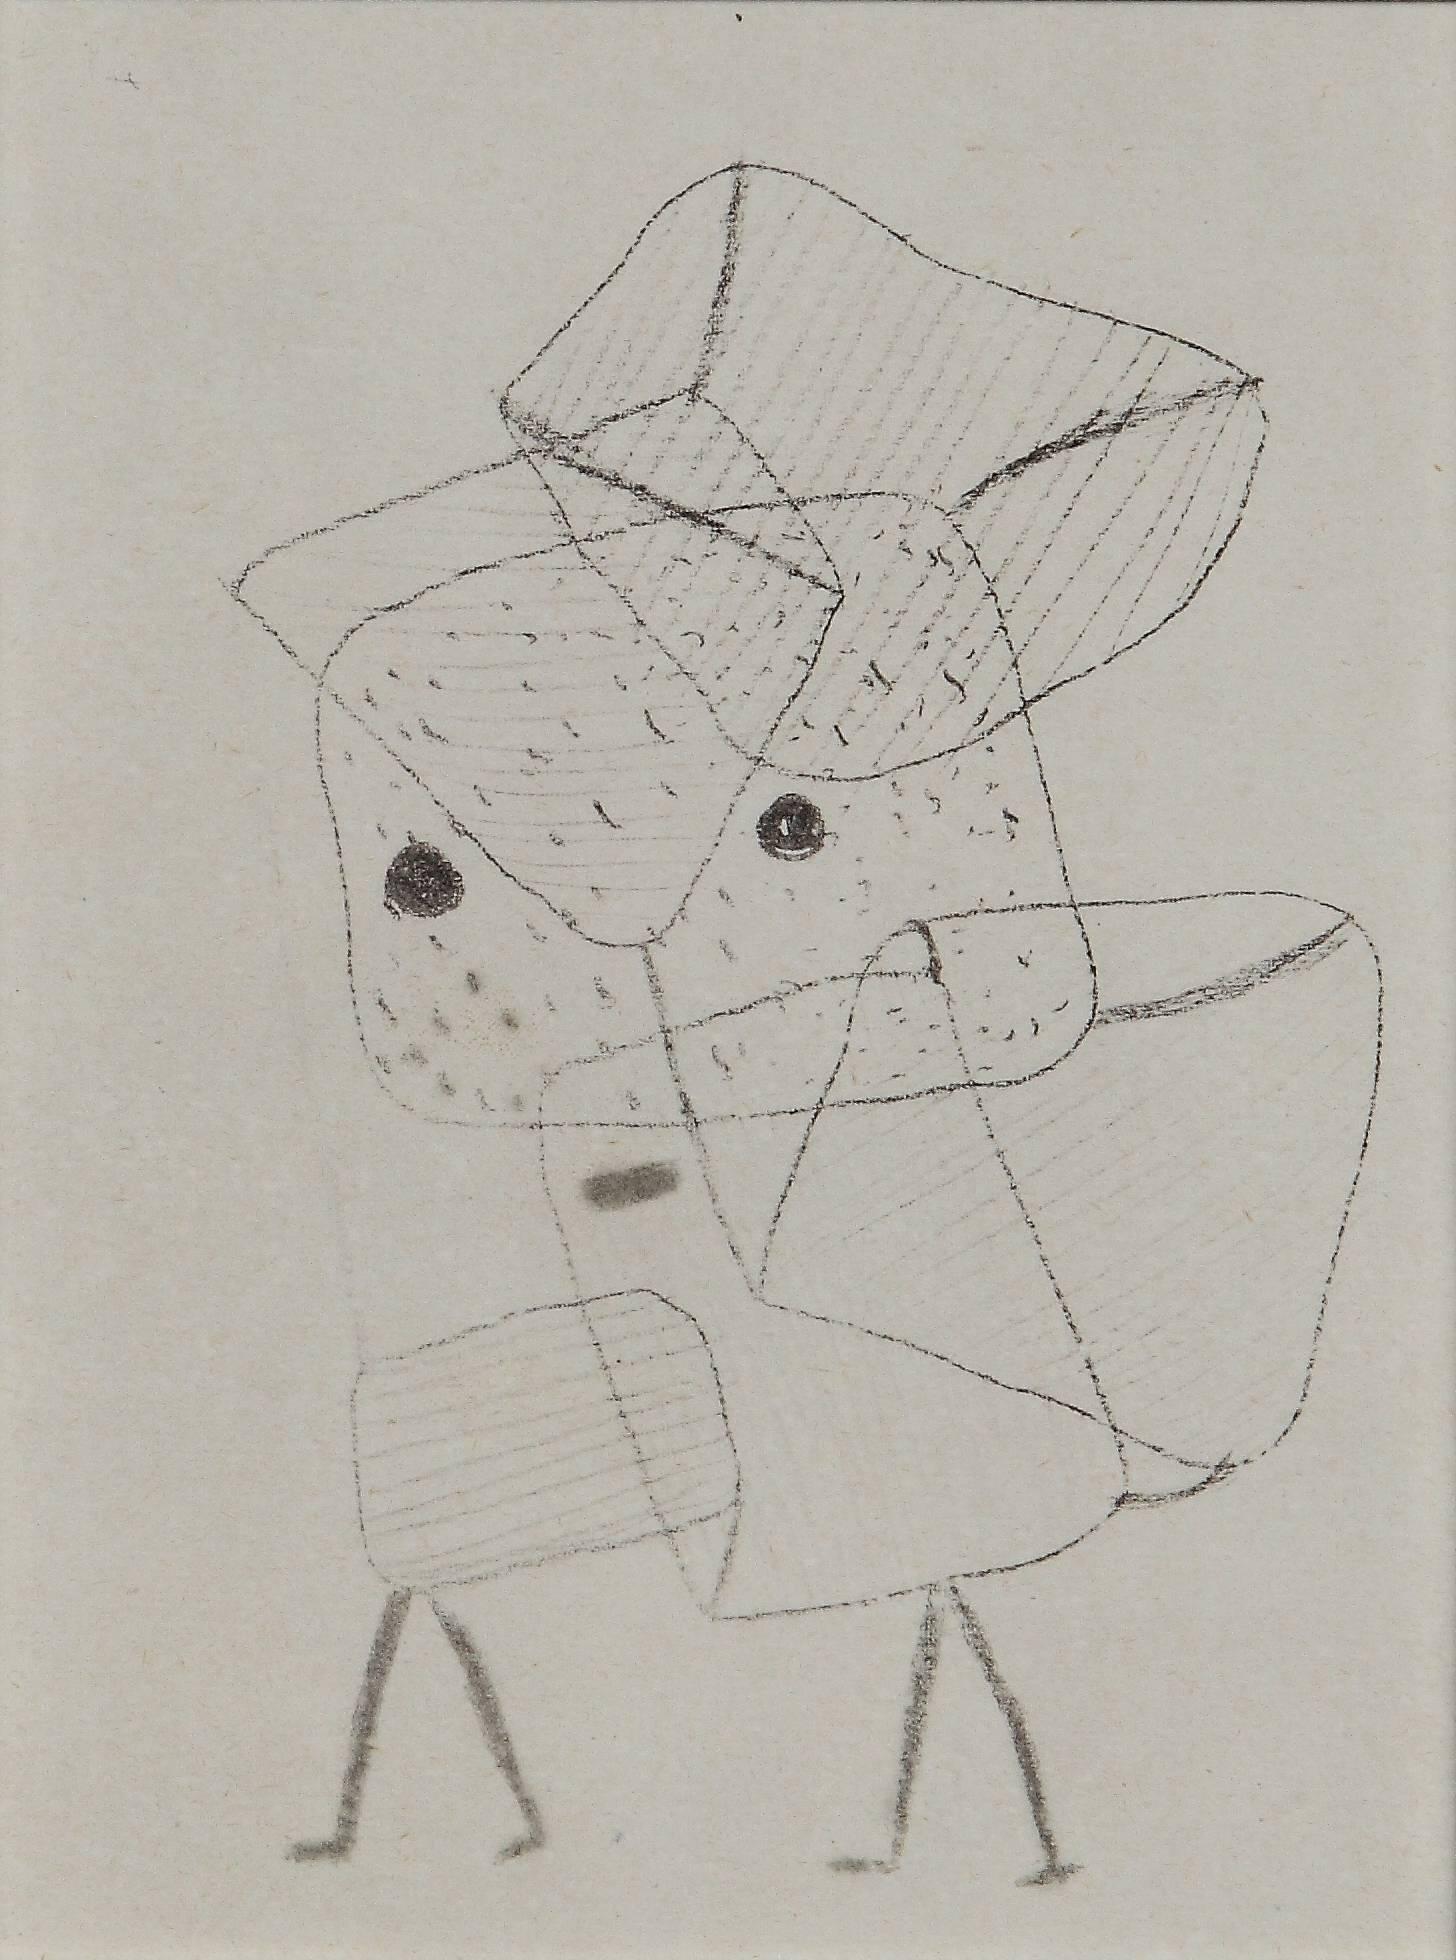 How many works of art did Paul Klee create?